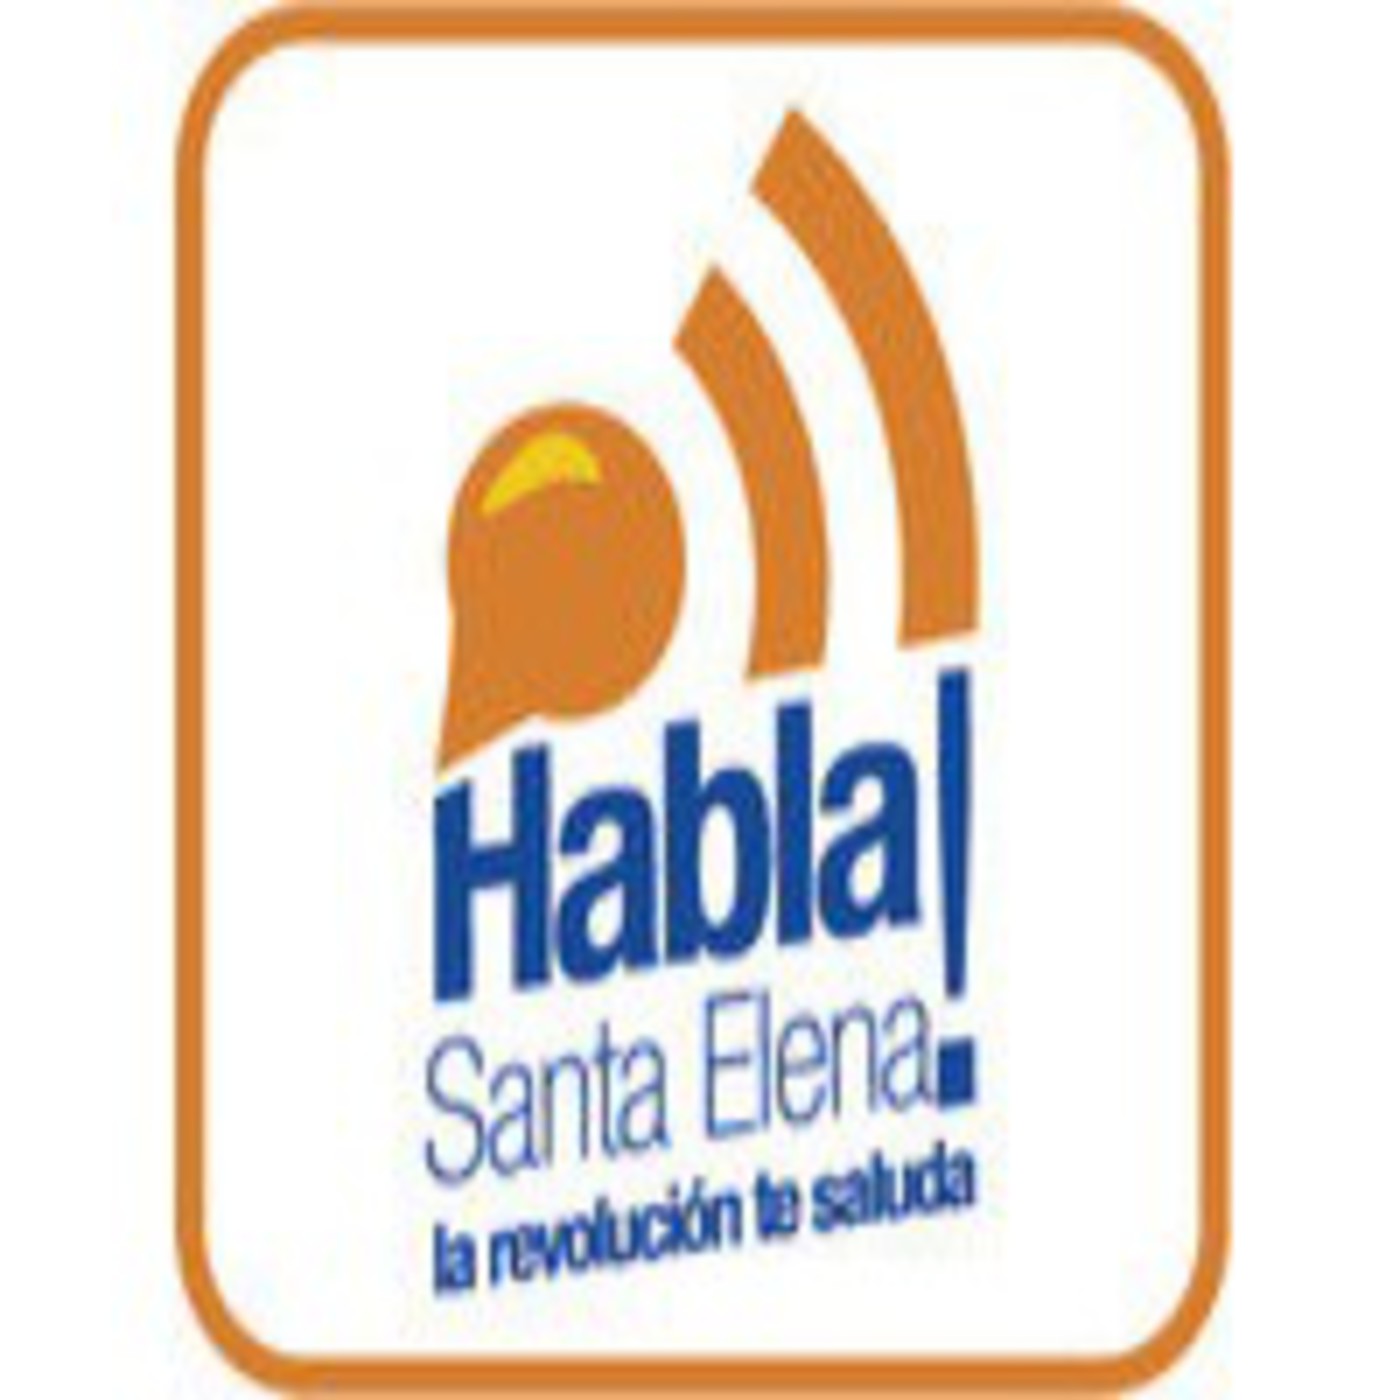 NotiLocal - Habla Santa Elena 01-06-15